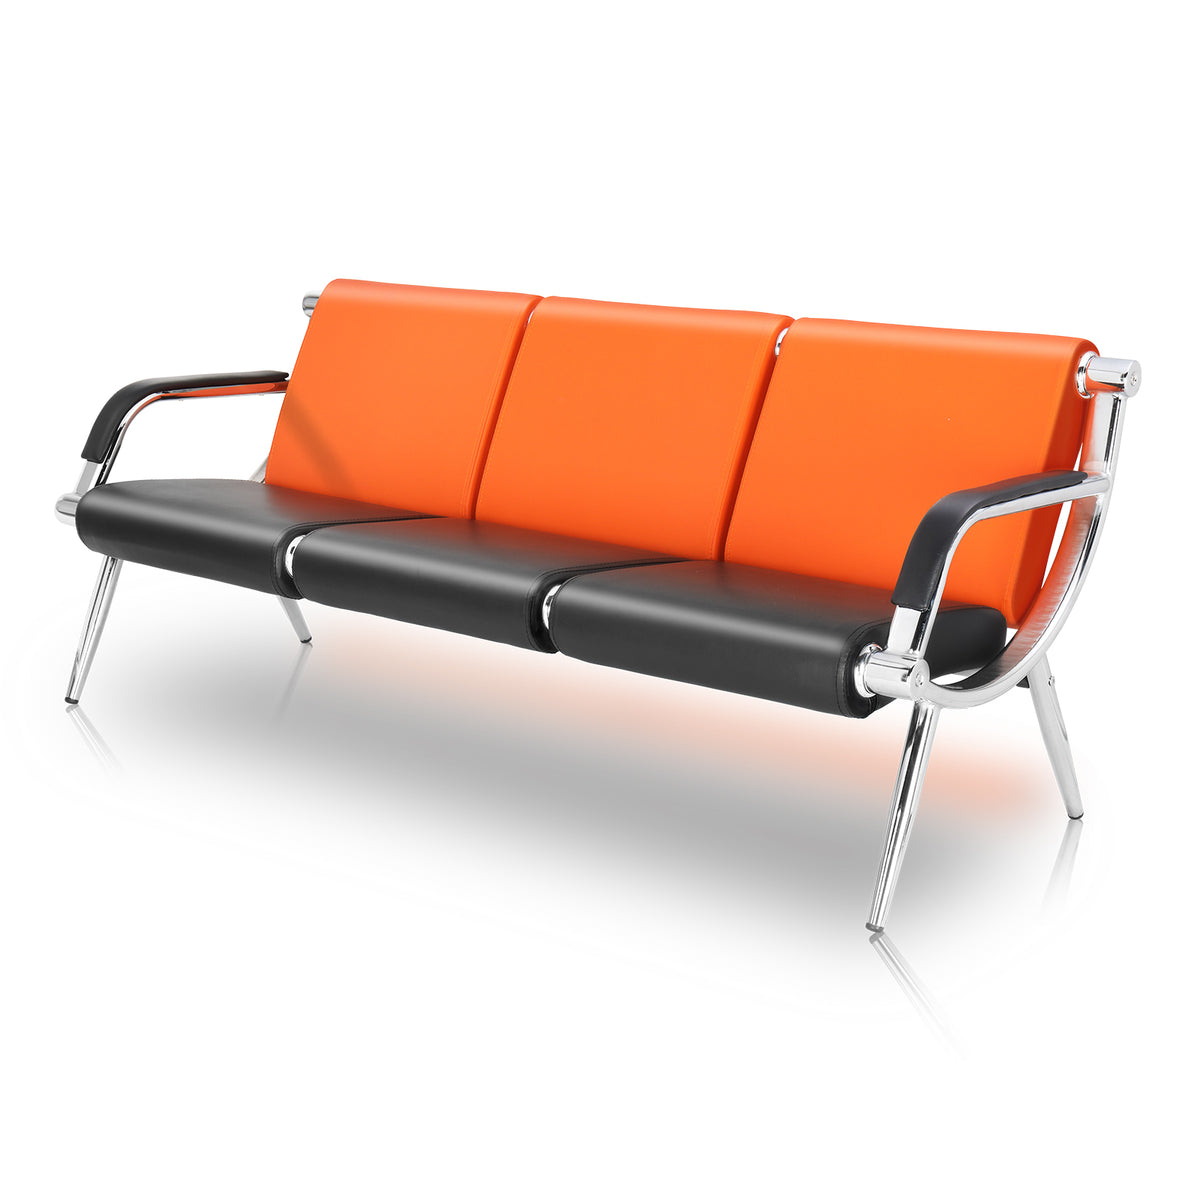 OmySalon Waiting Room Reception Bench with Armrest Orange